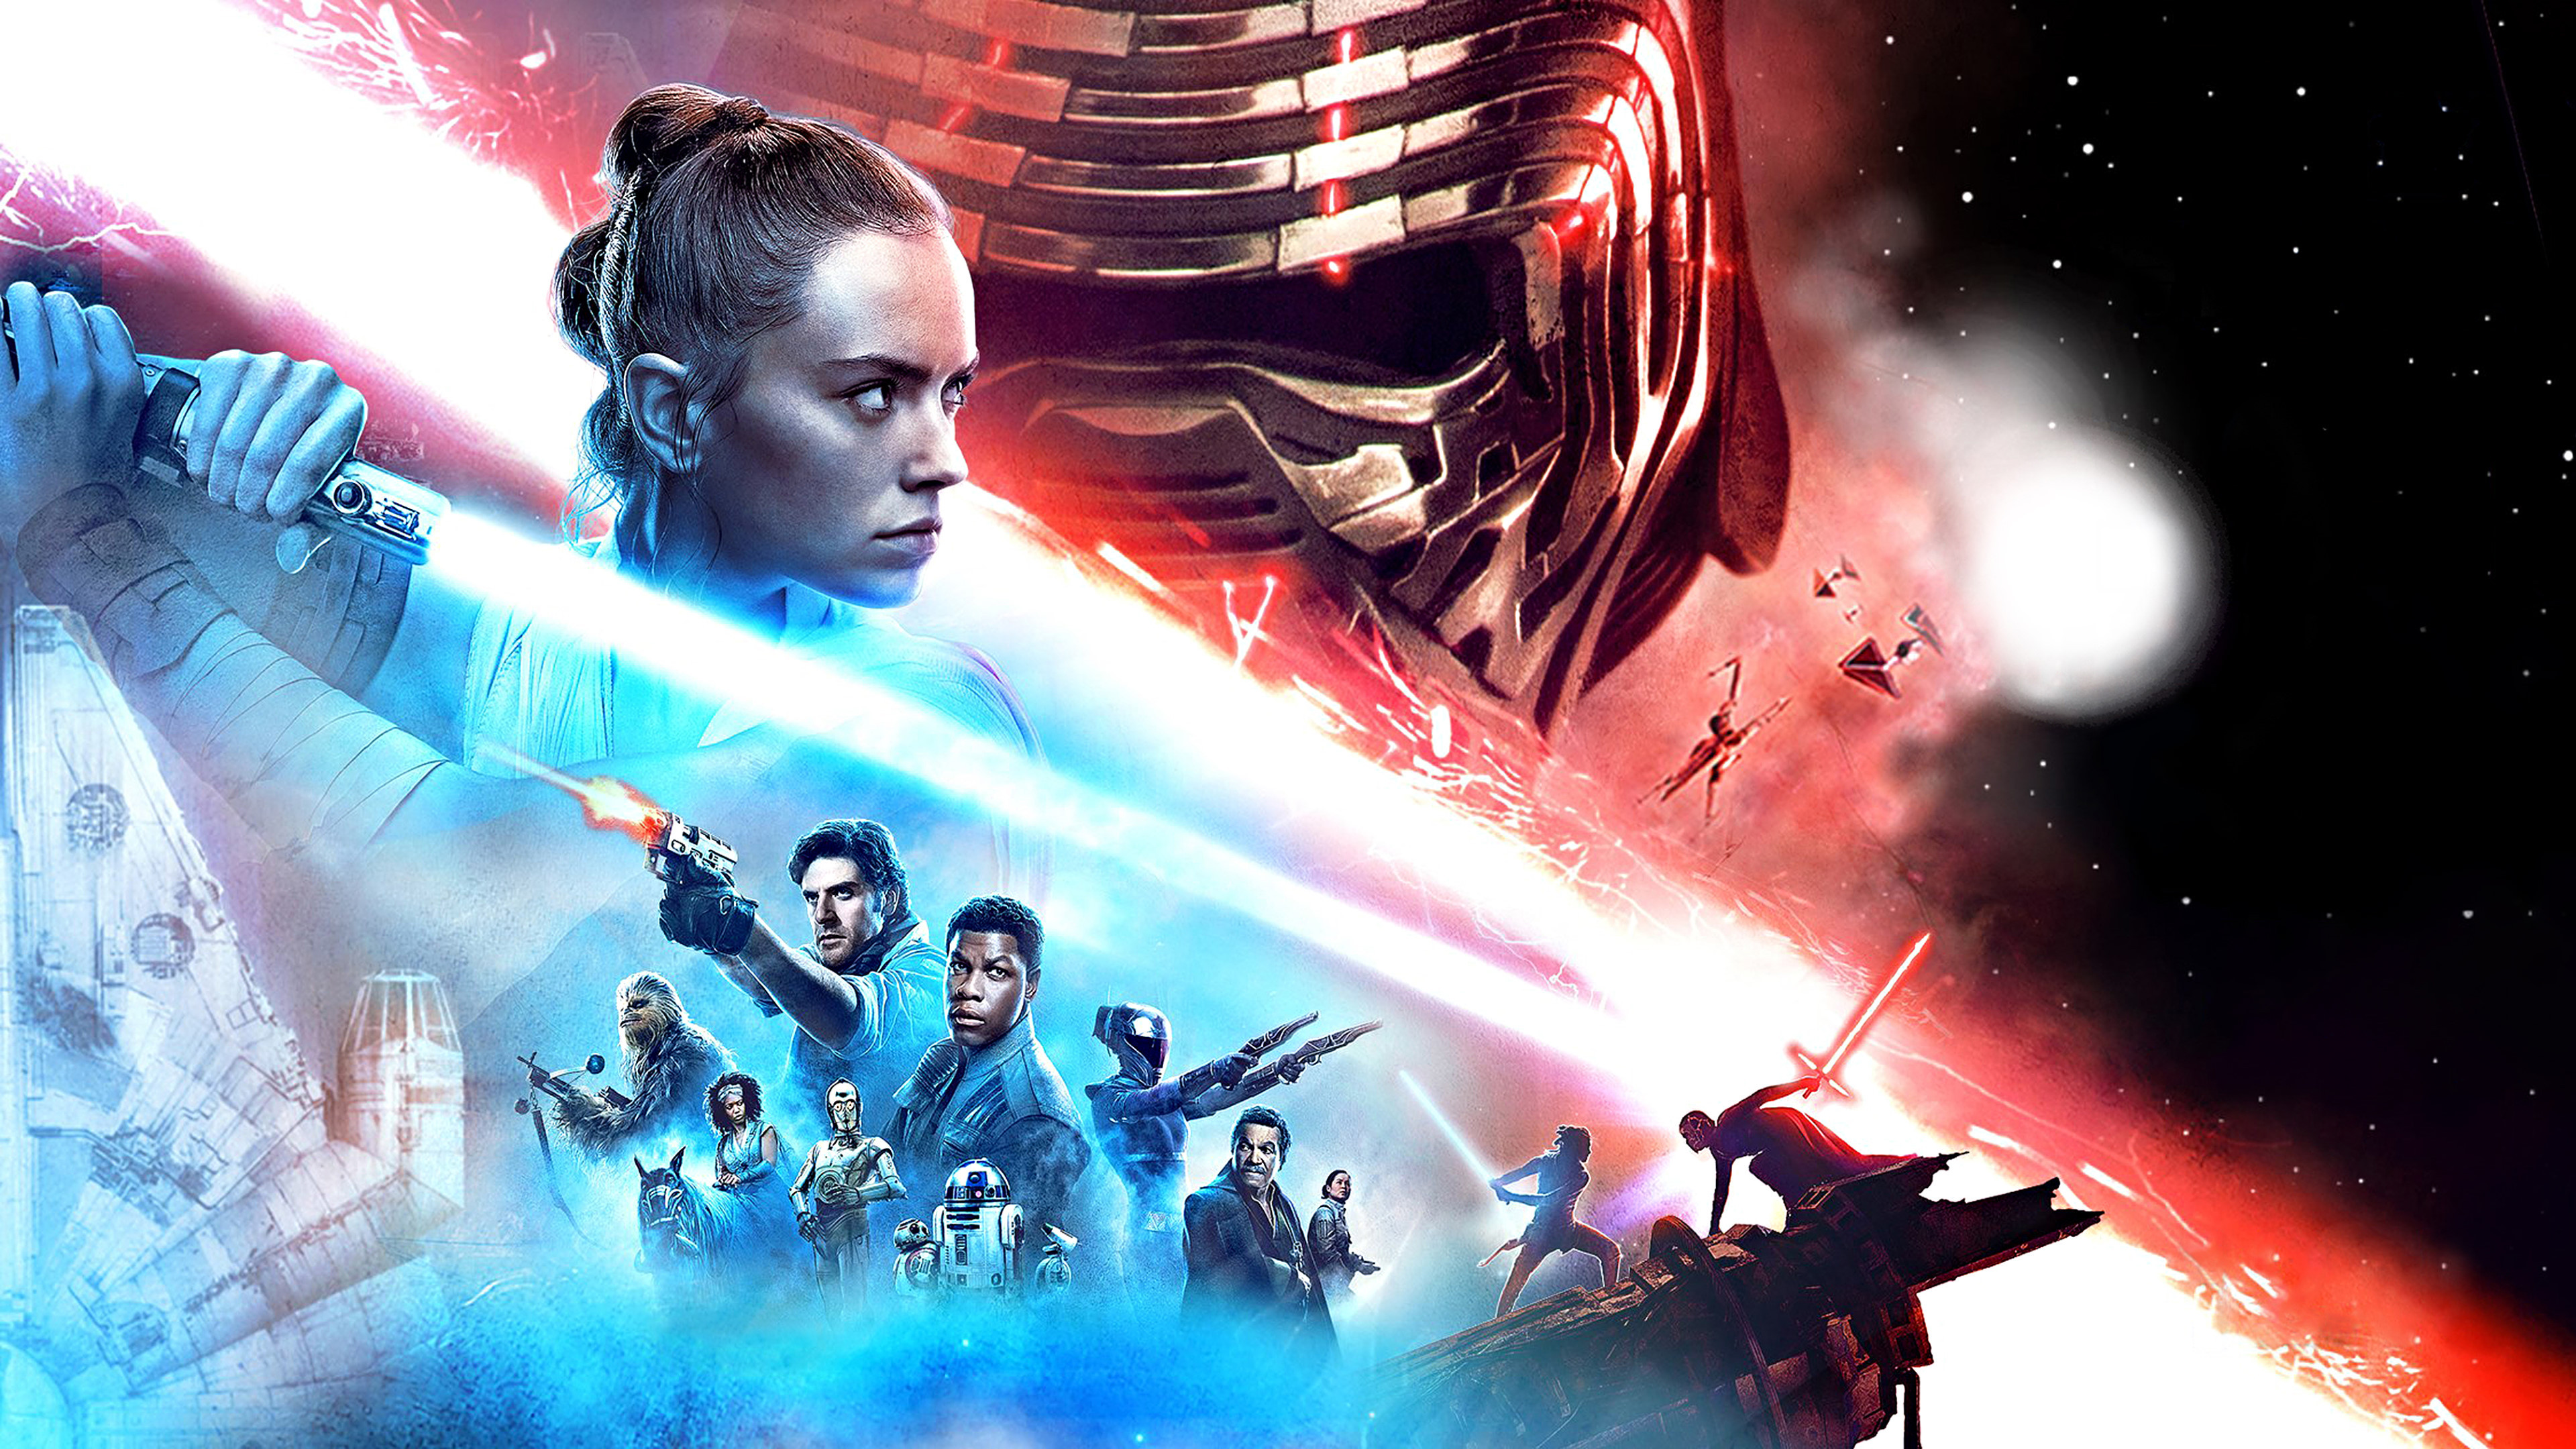 Download wallpaper: Episode IX Star Wars: The Rise